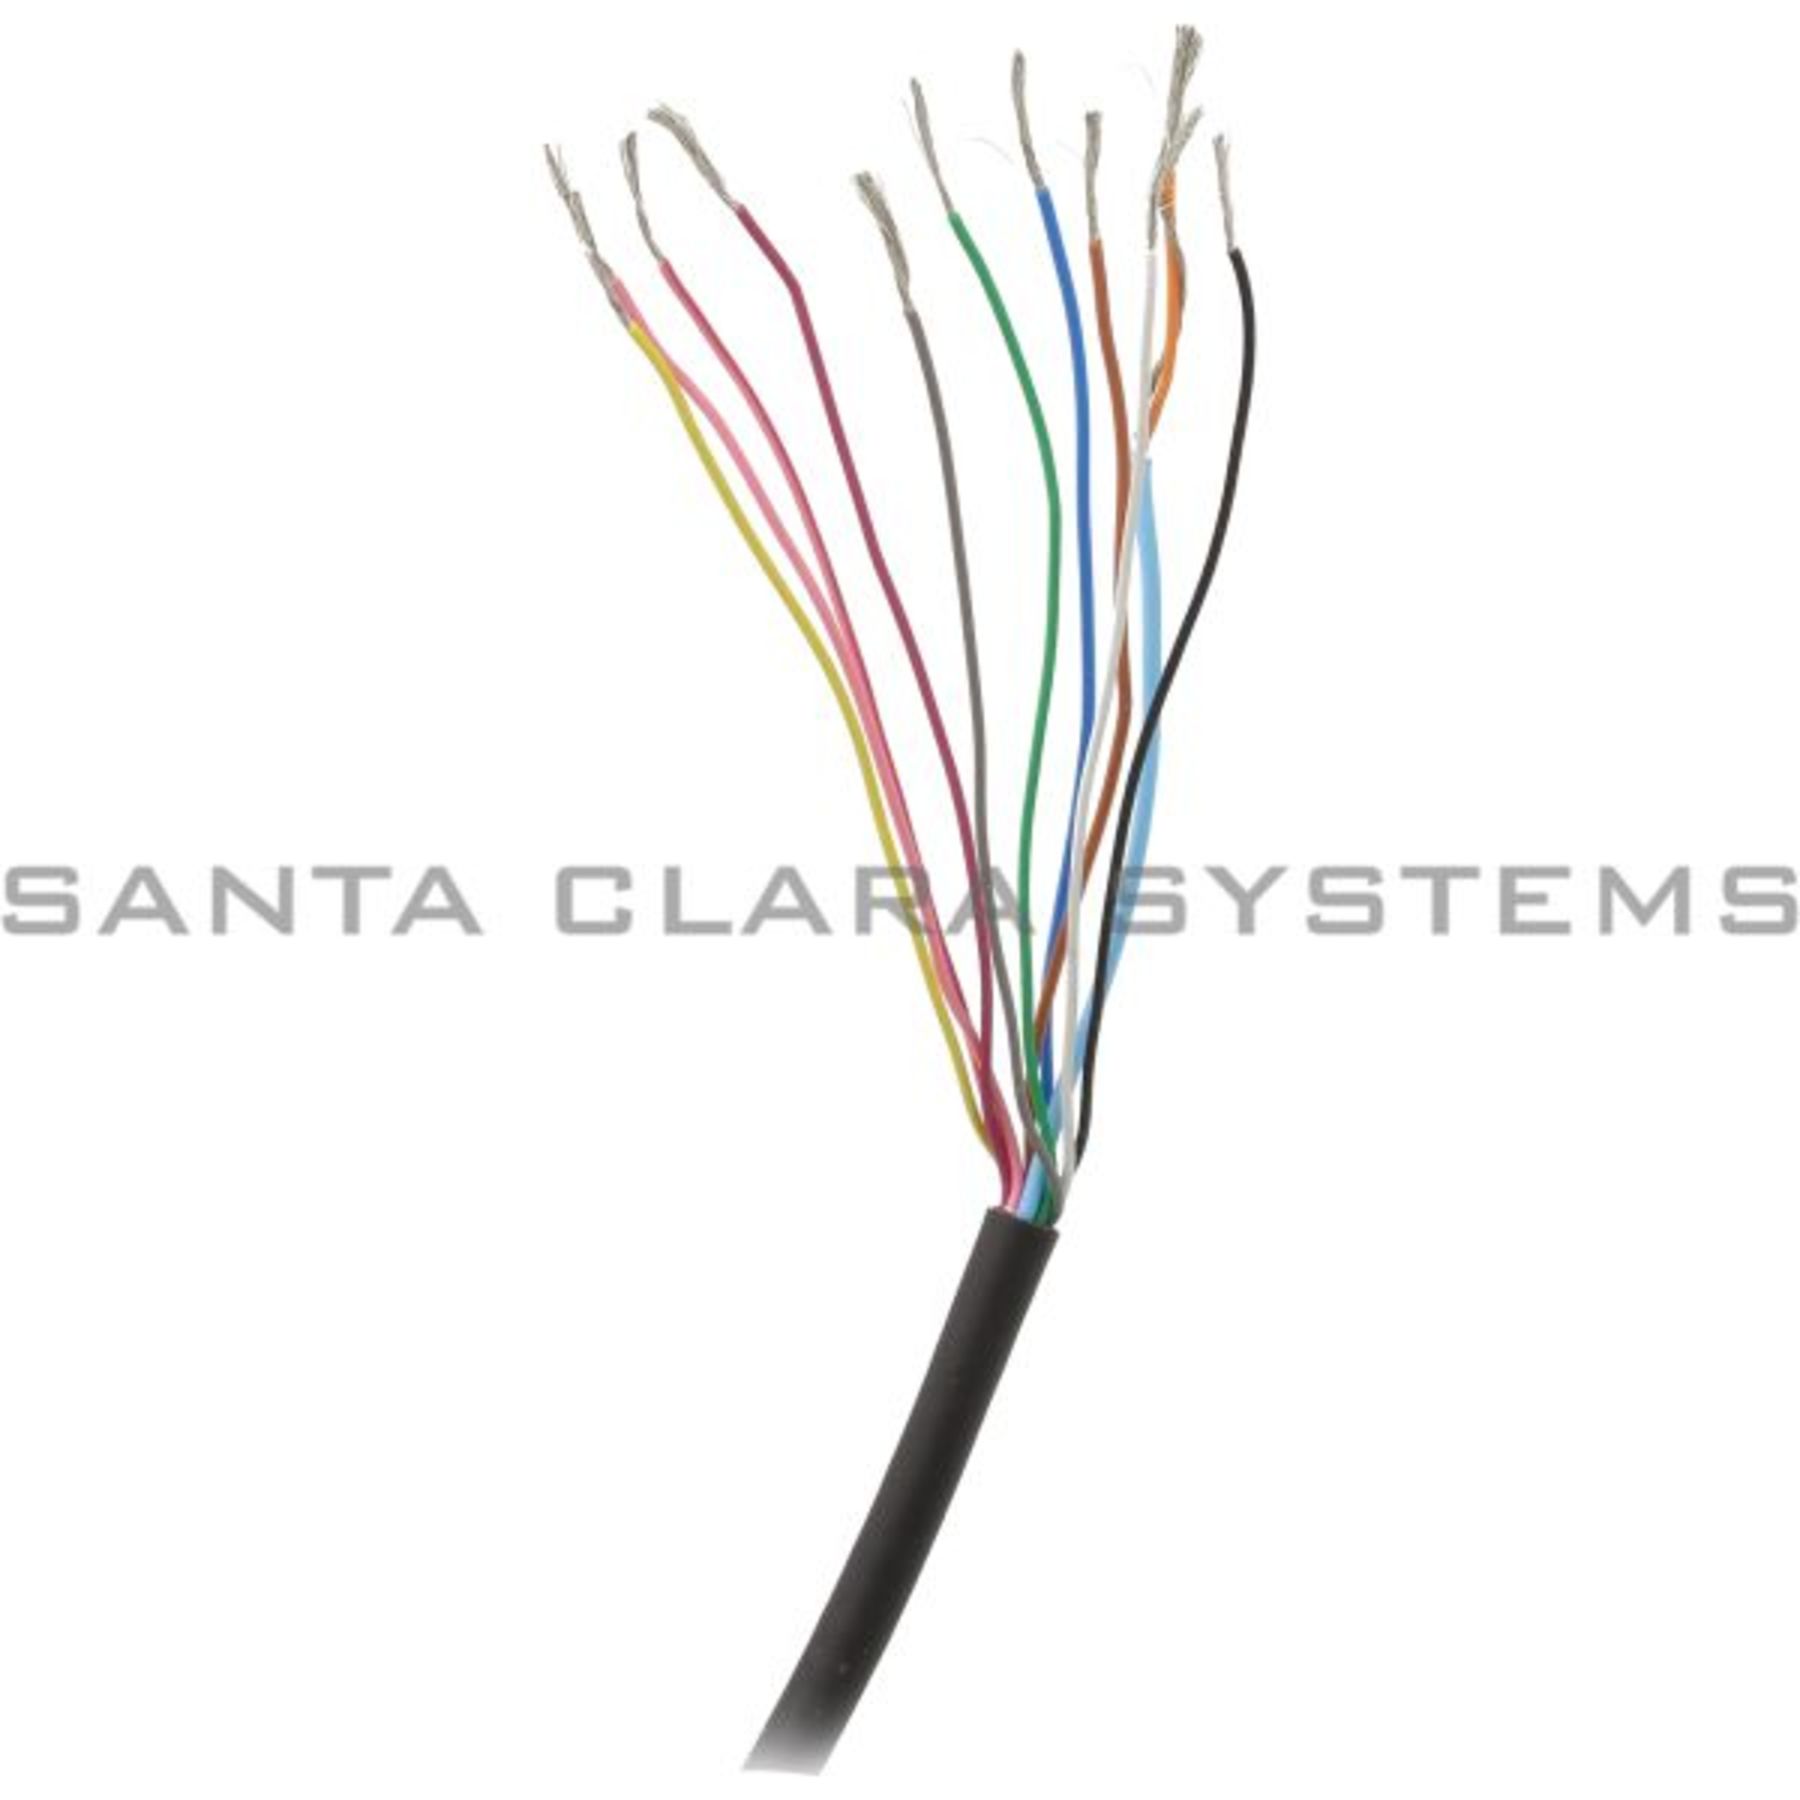 IL-1000 Laser Sensor Keyence In Stock - Santa Clara Systems